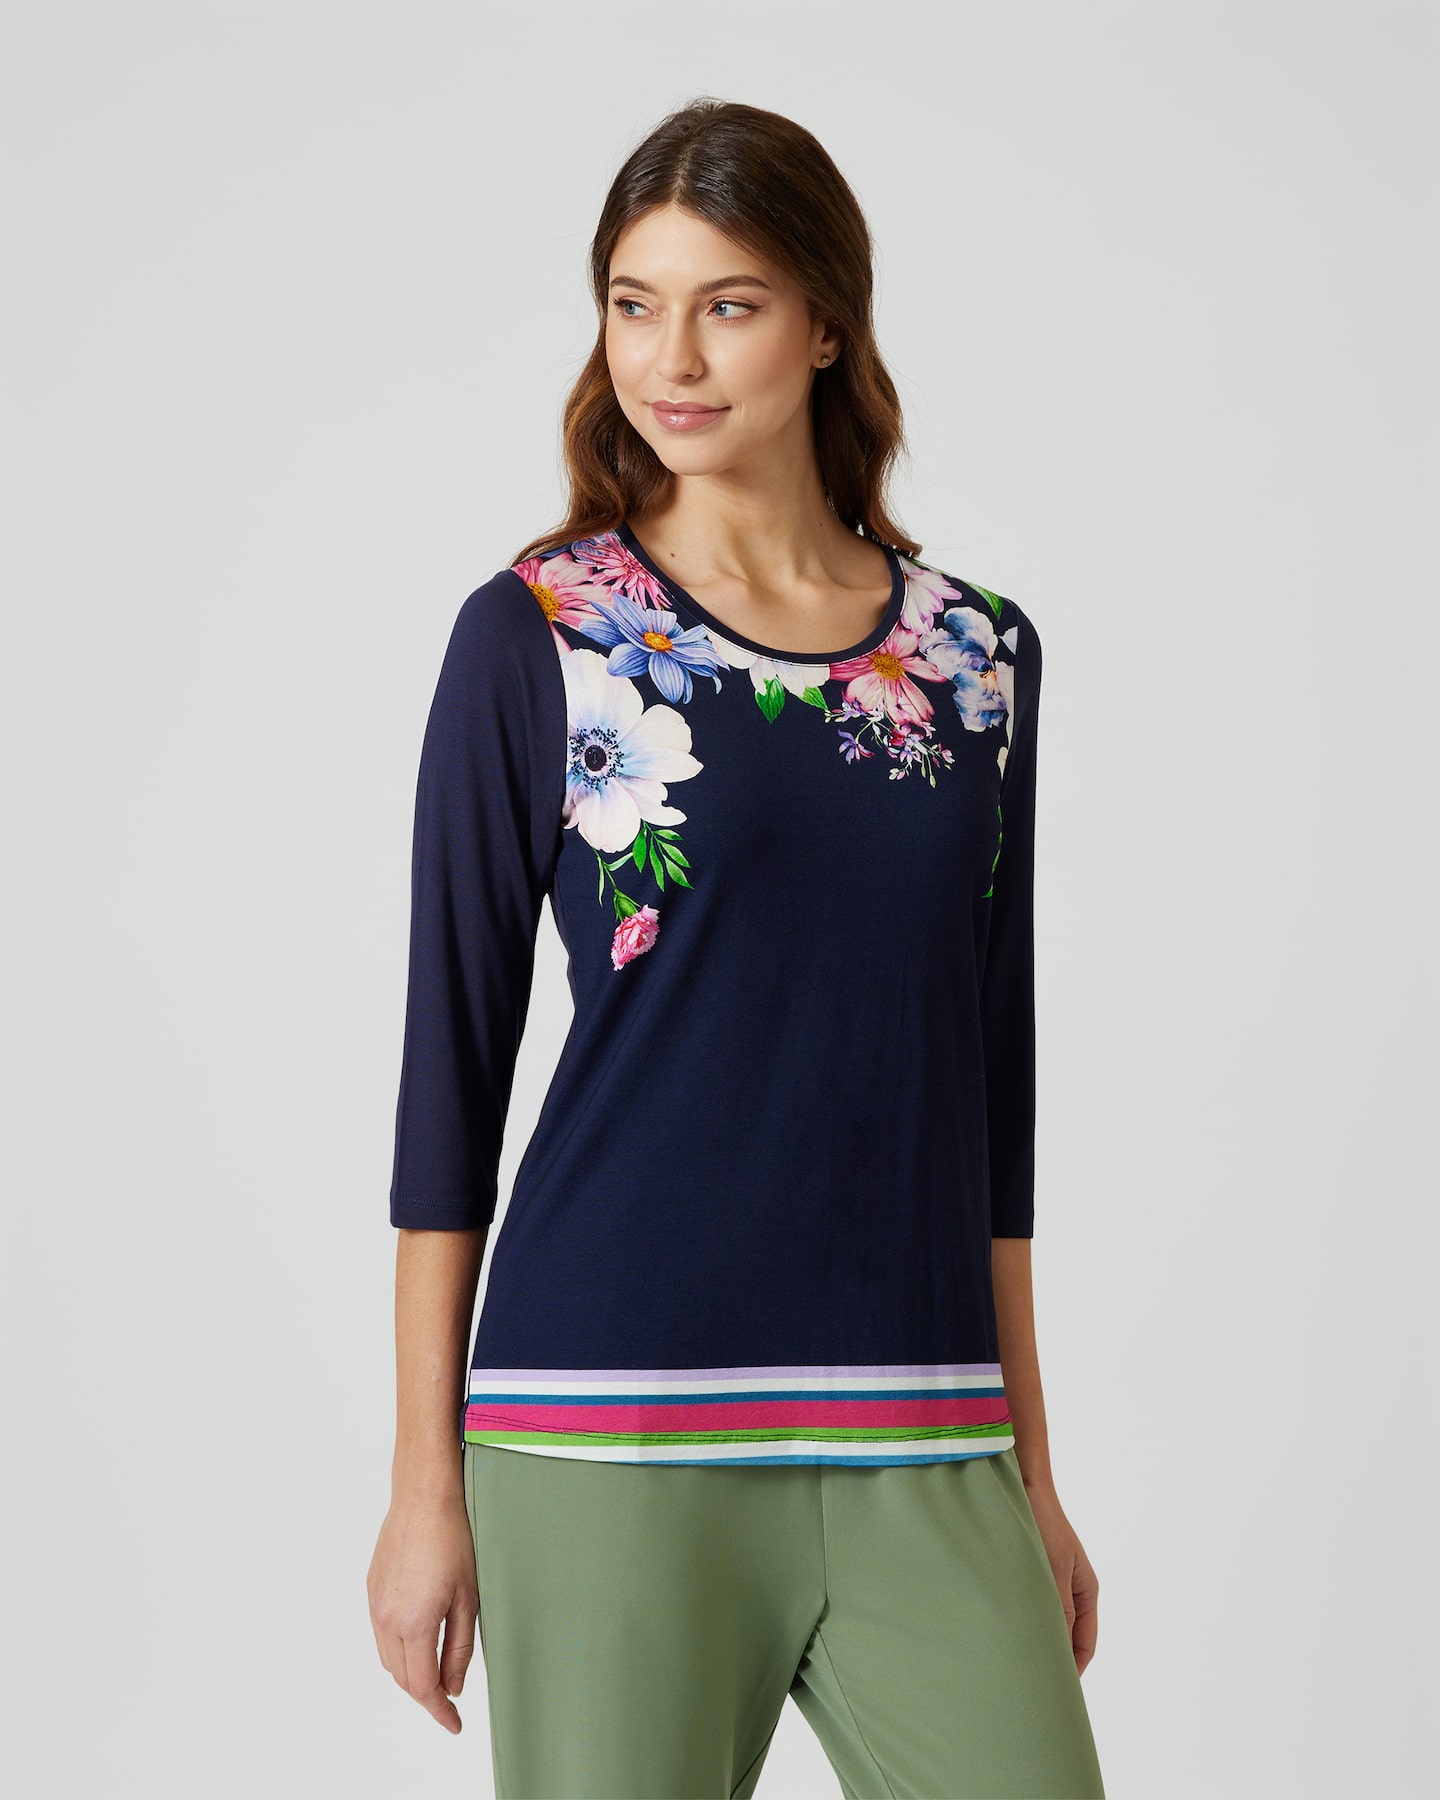 Produktabbildung für Shirt "Flower Stripes"